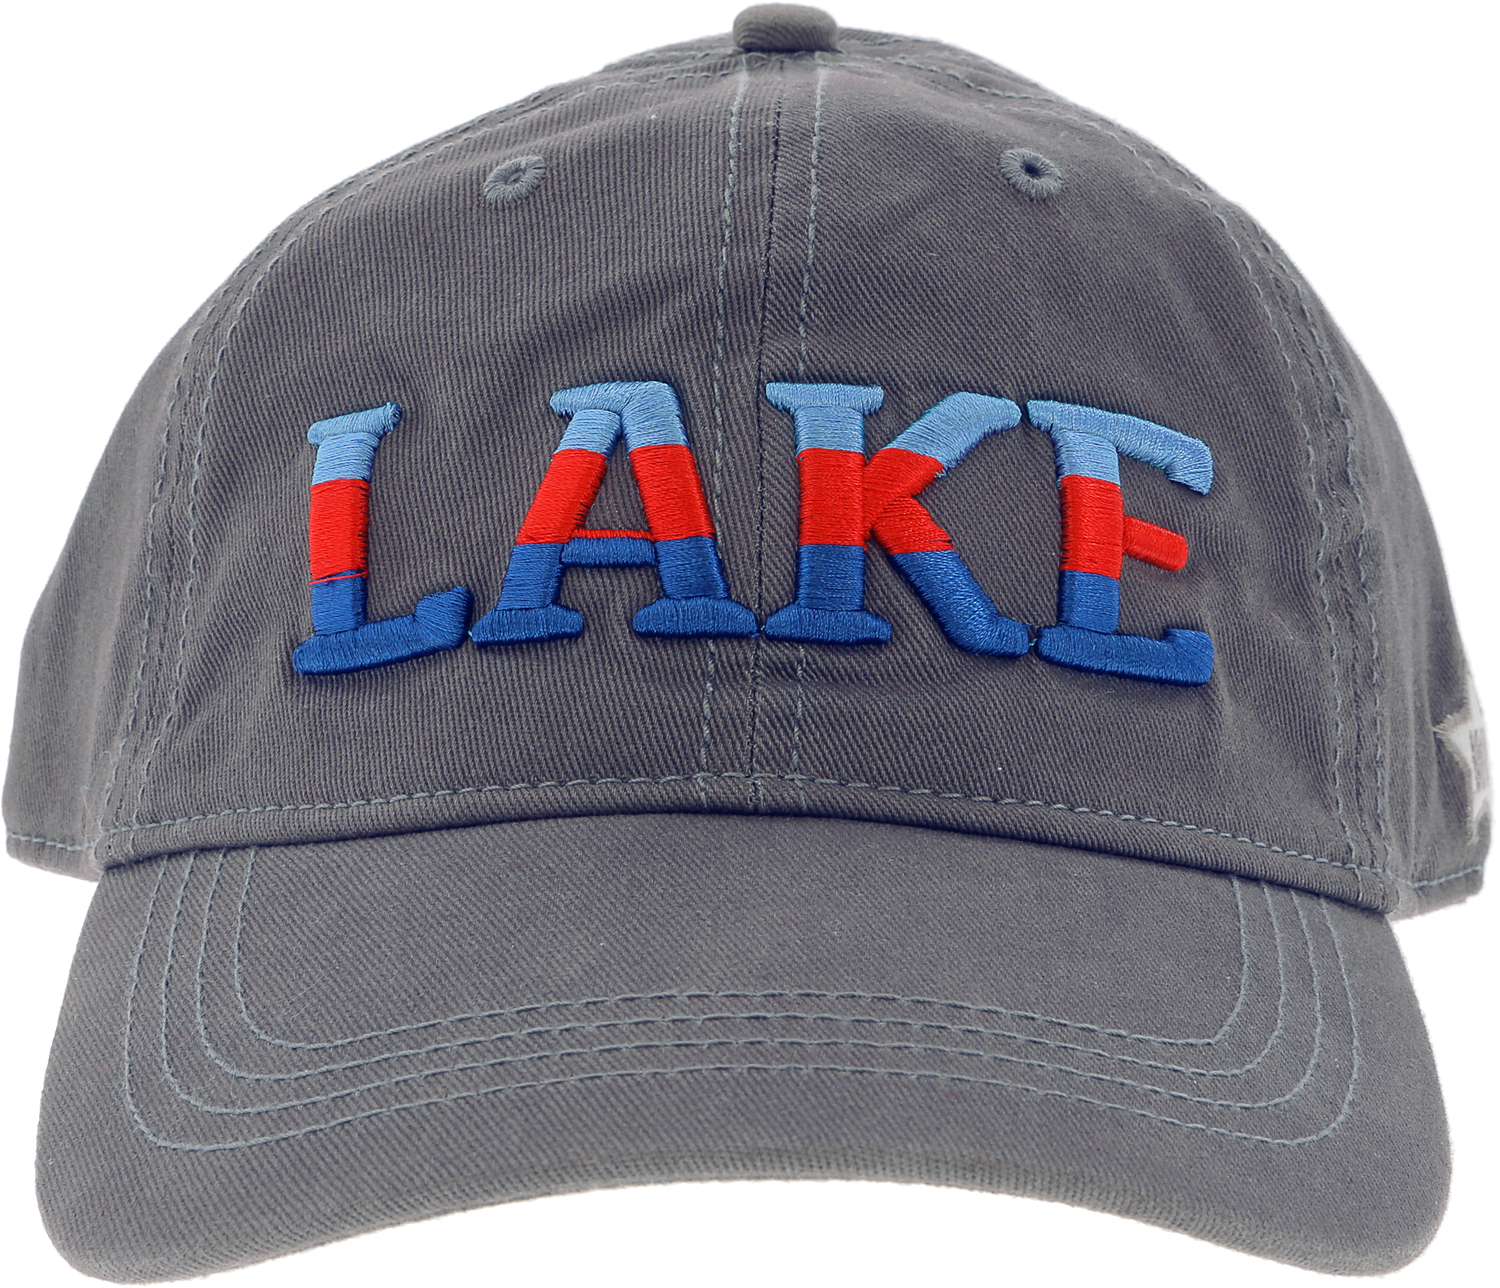 Lake by We People - Lake - Dark Gray Adjustable Hat